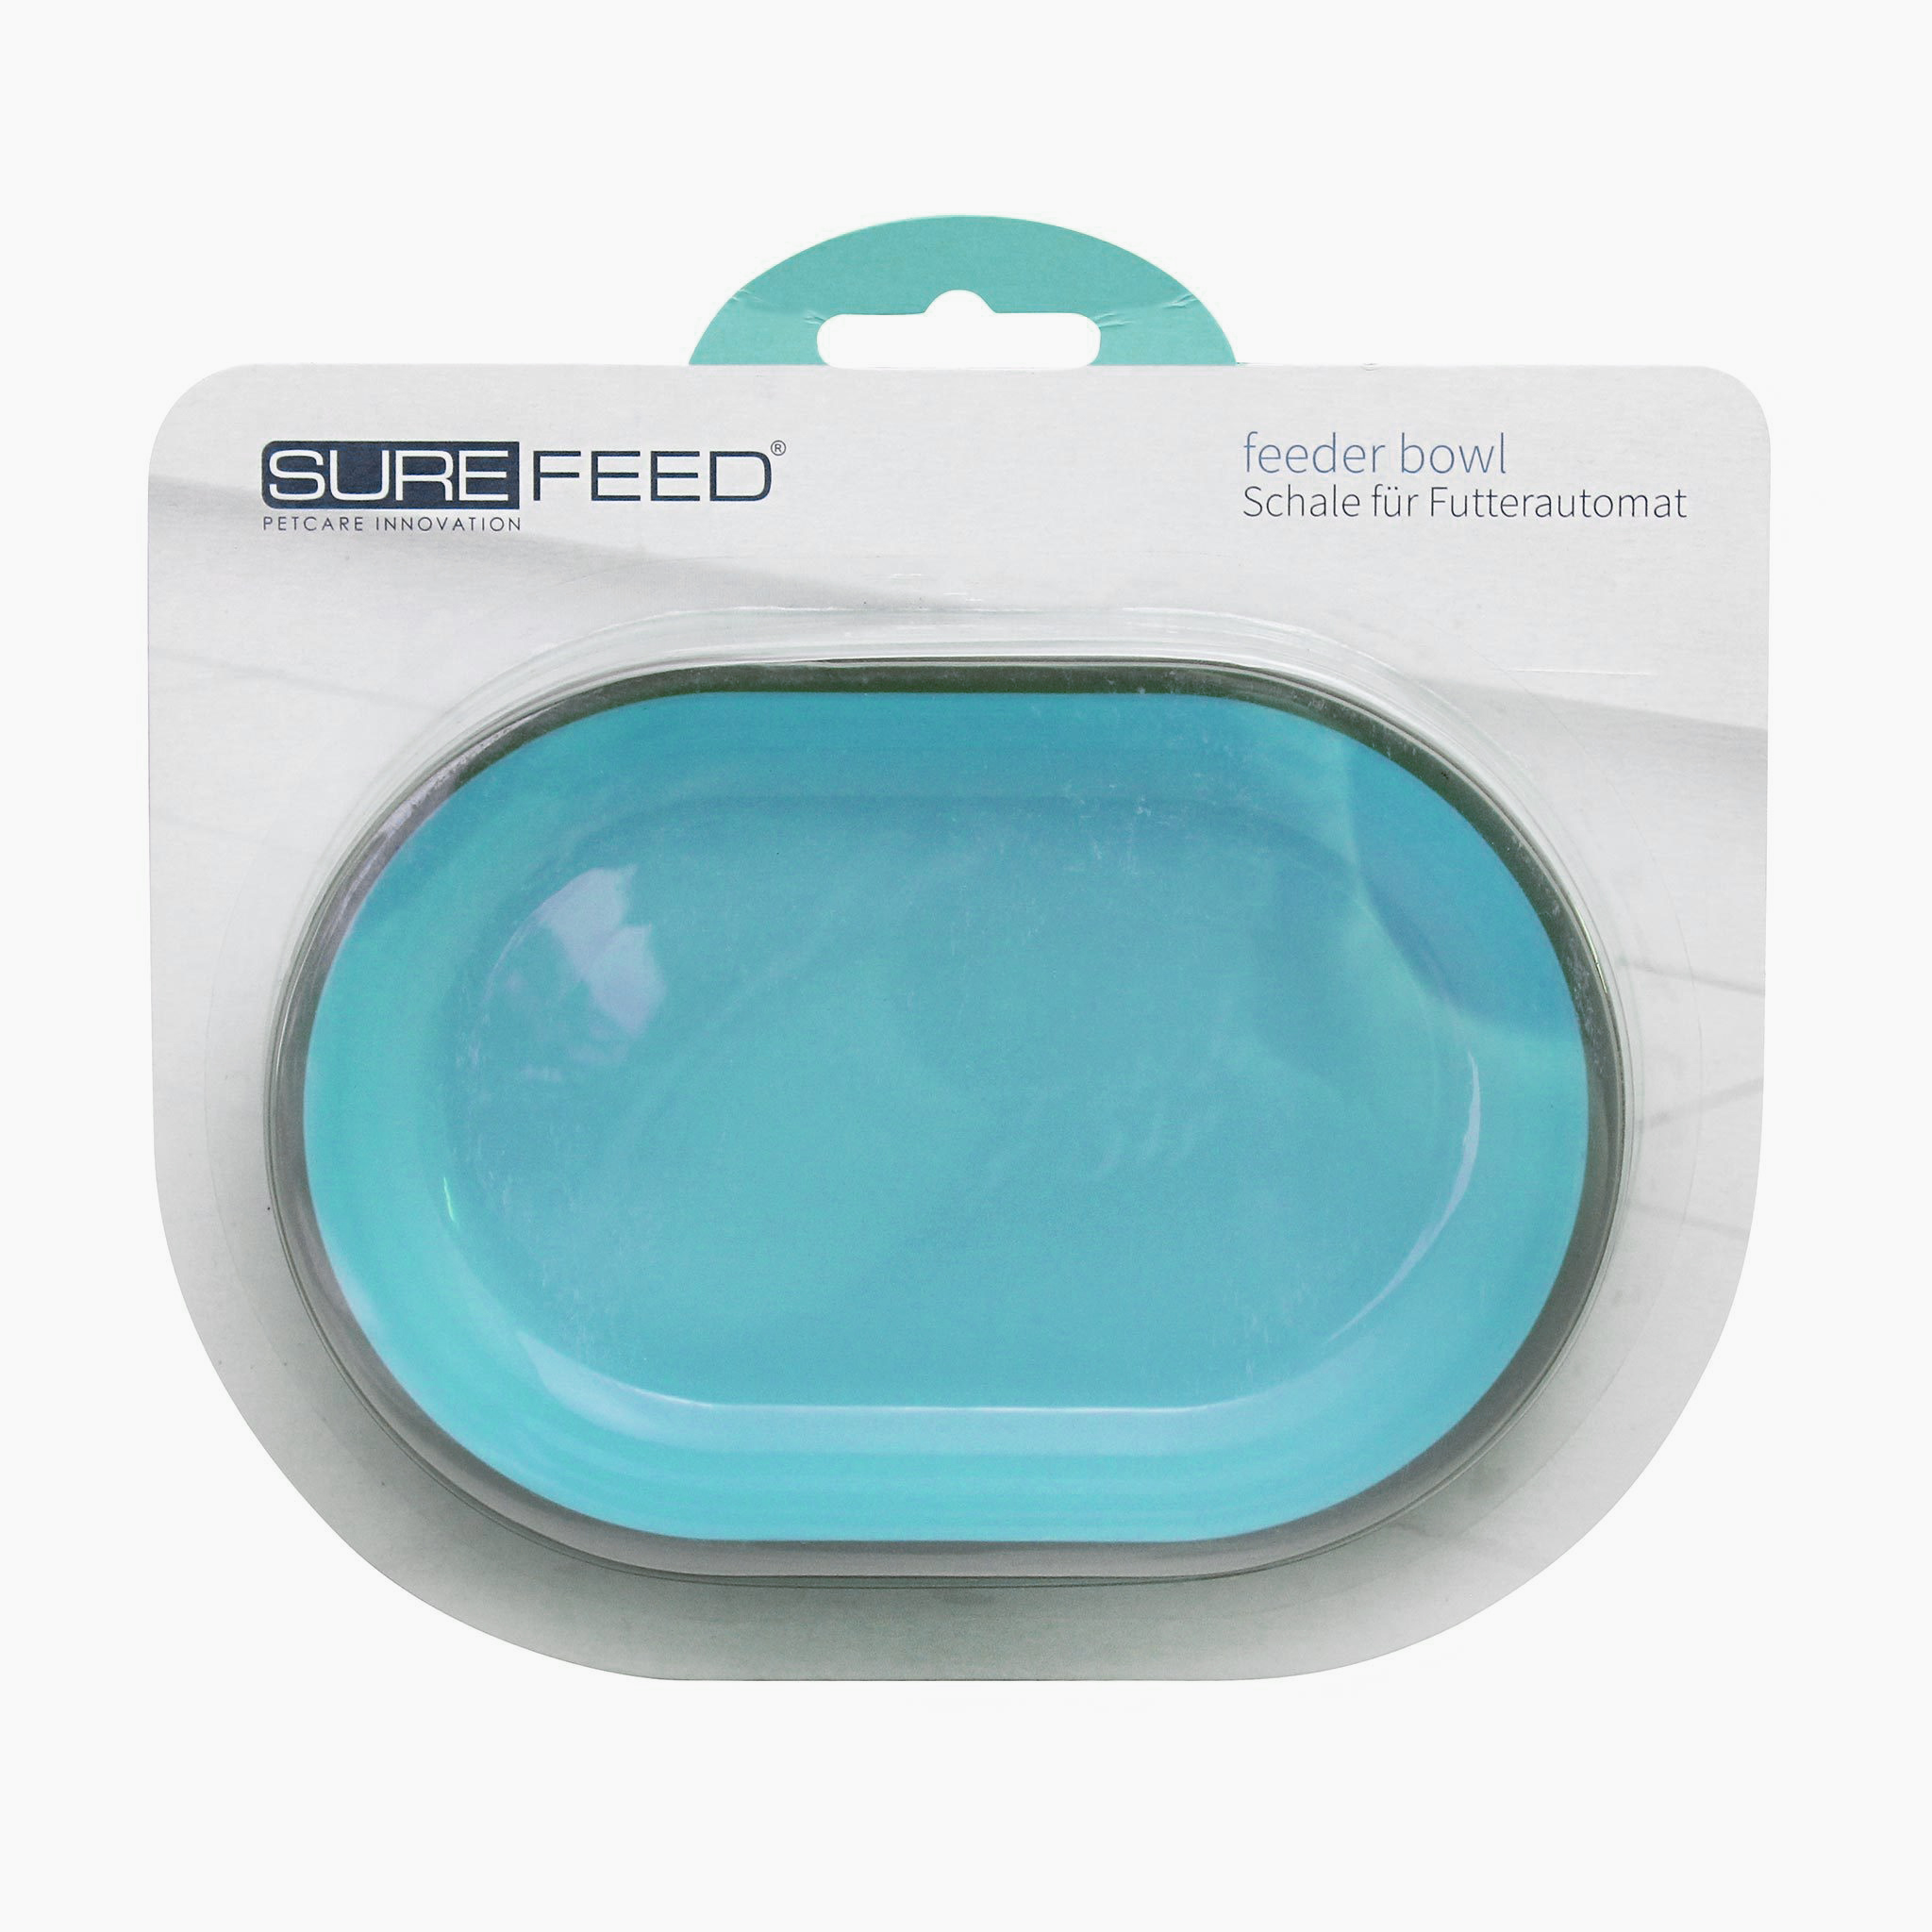 SureFeed Feeder Bowl ชามให้อาหาร สำหรับที่ให้อาหารอัตโนมัติรุ่น Sensor และ Microchip สุนัขและแมว ความจุ 400 มล. (สีฟ้า)